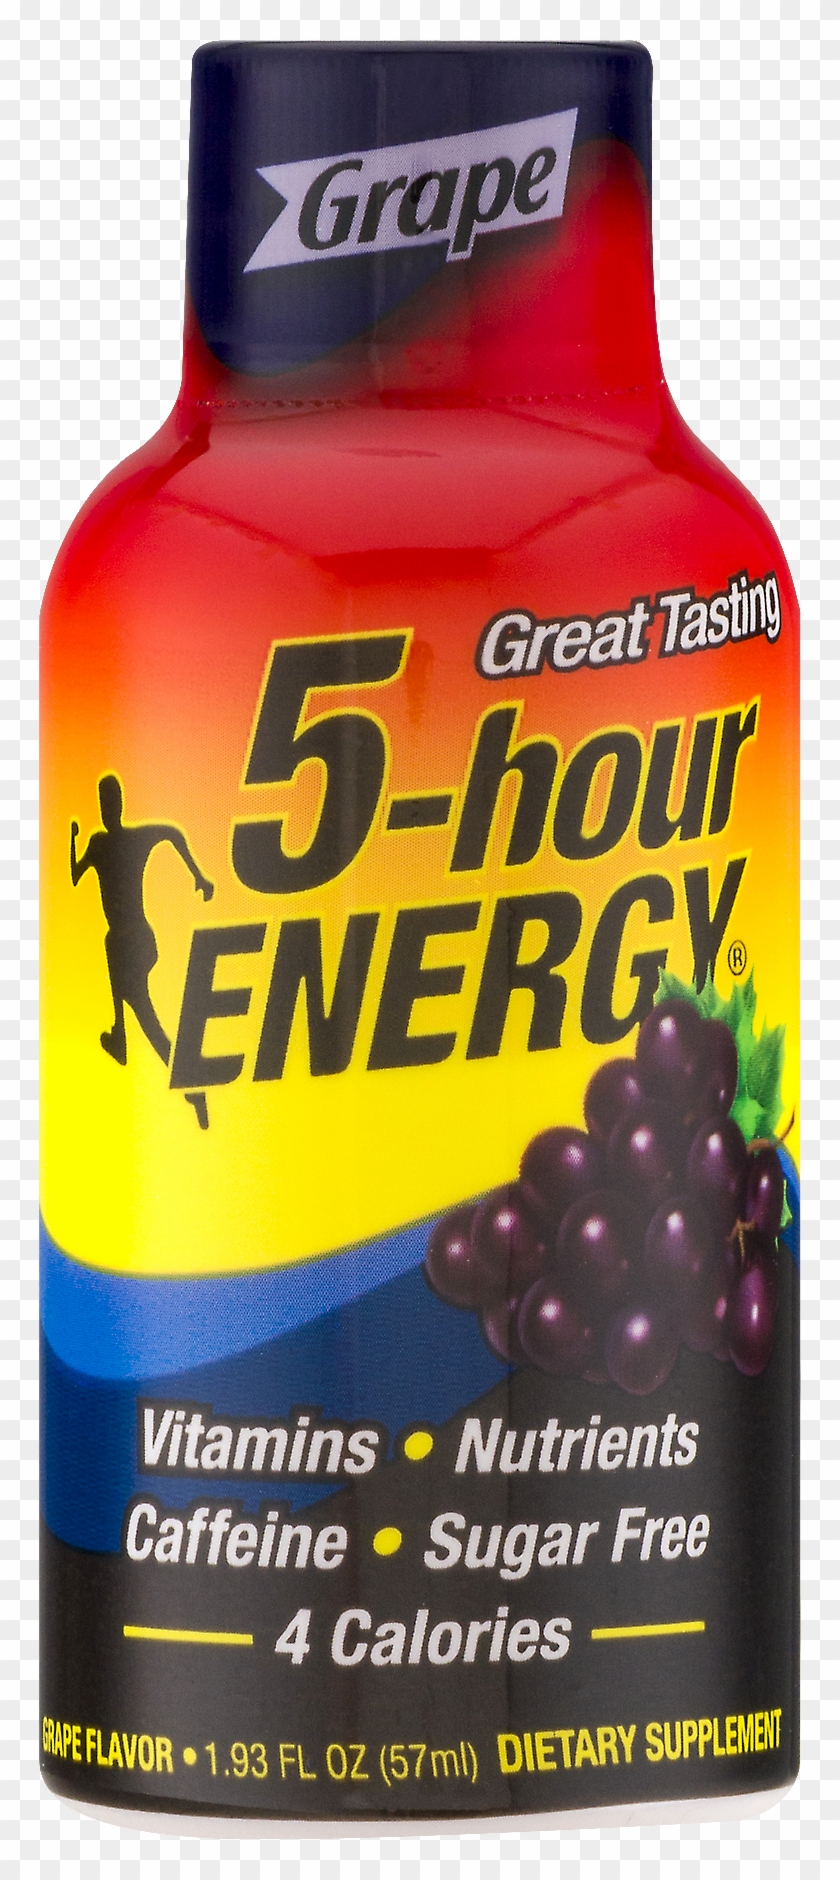 5-hour Energy Grape, Single Bottle - 5 Hour Energy Drink Clipart #3962600